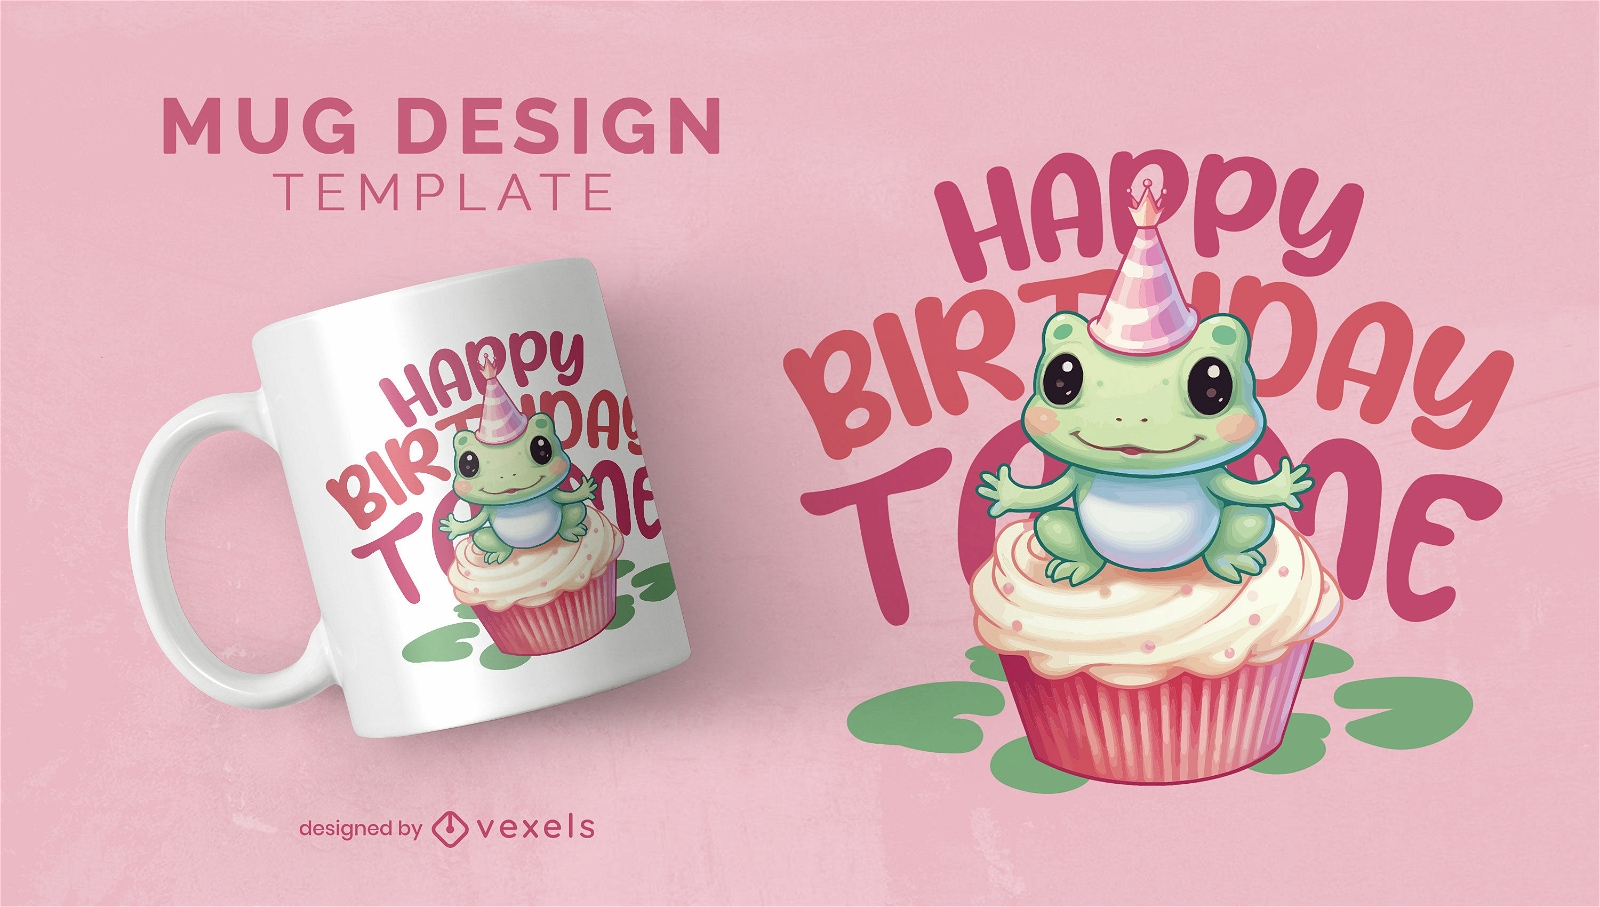 Cute frog animal on cupcake mug design